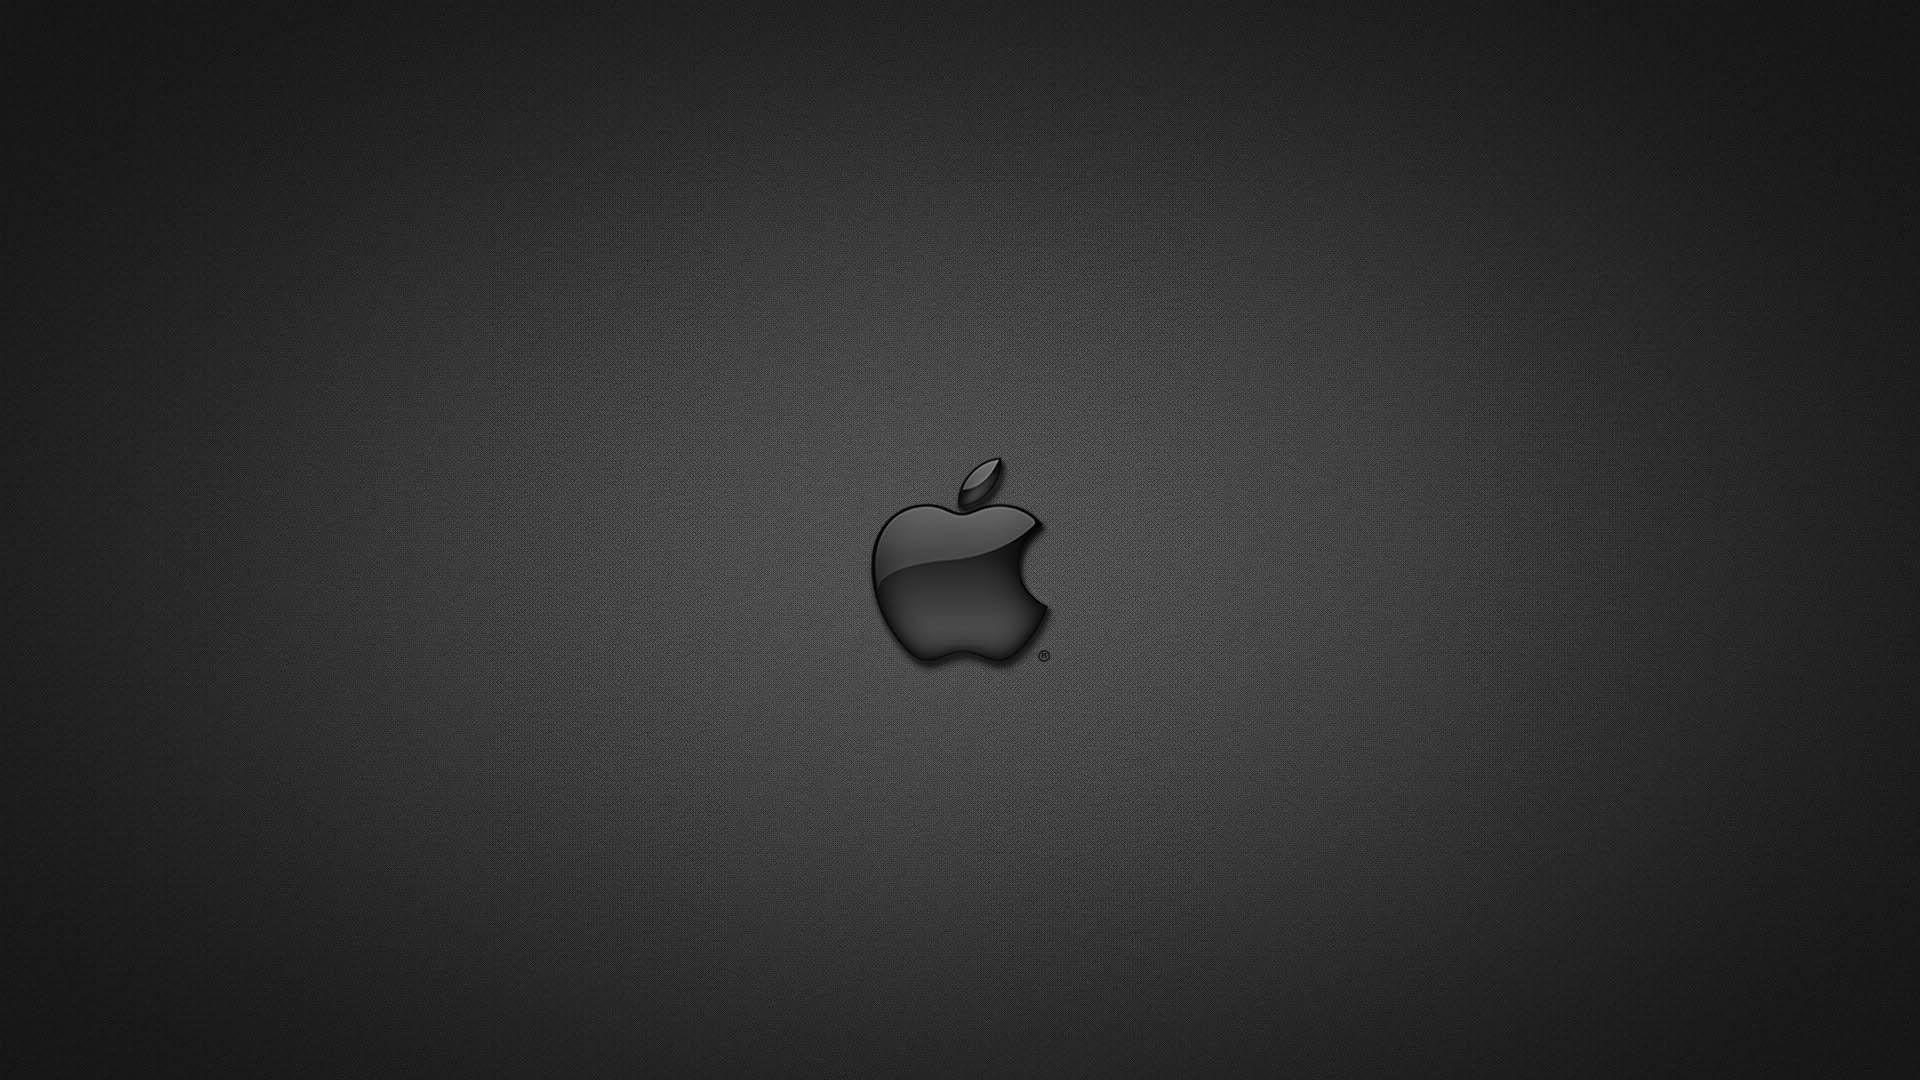 New Apple iPhone 5 Wallpaper, Apple iPhone 5 Wallpaper. W